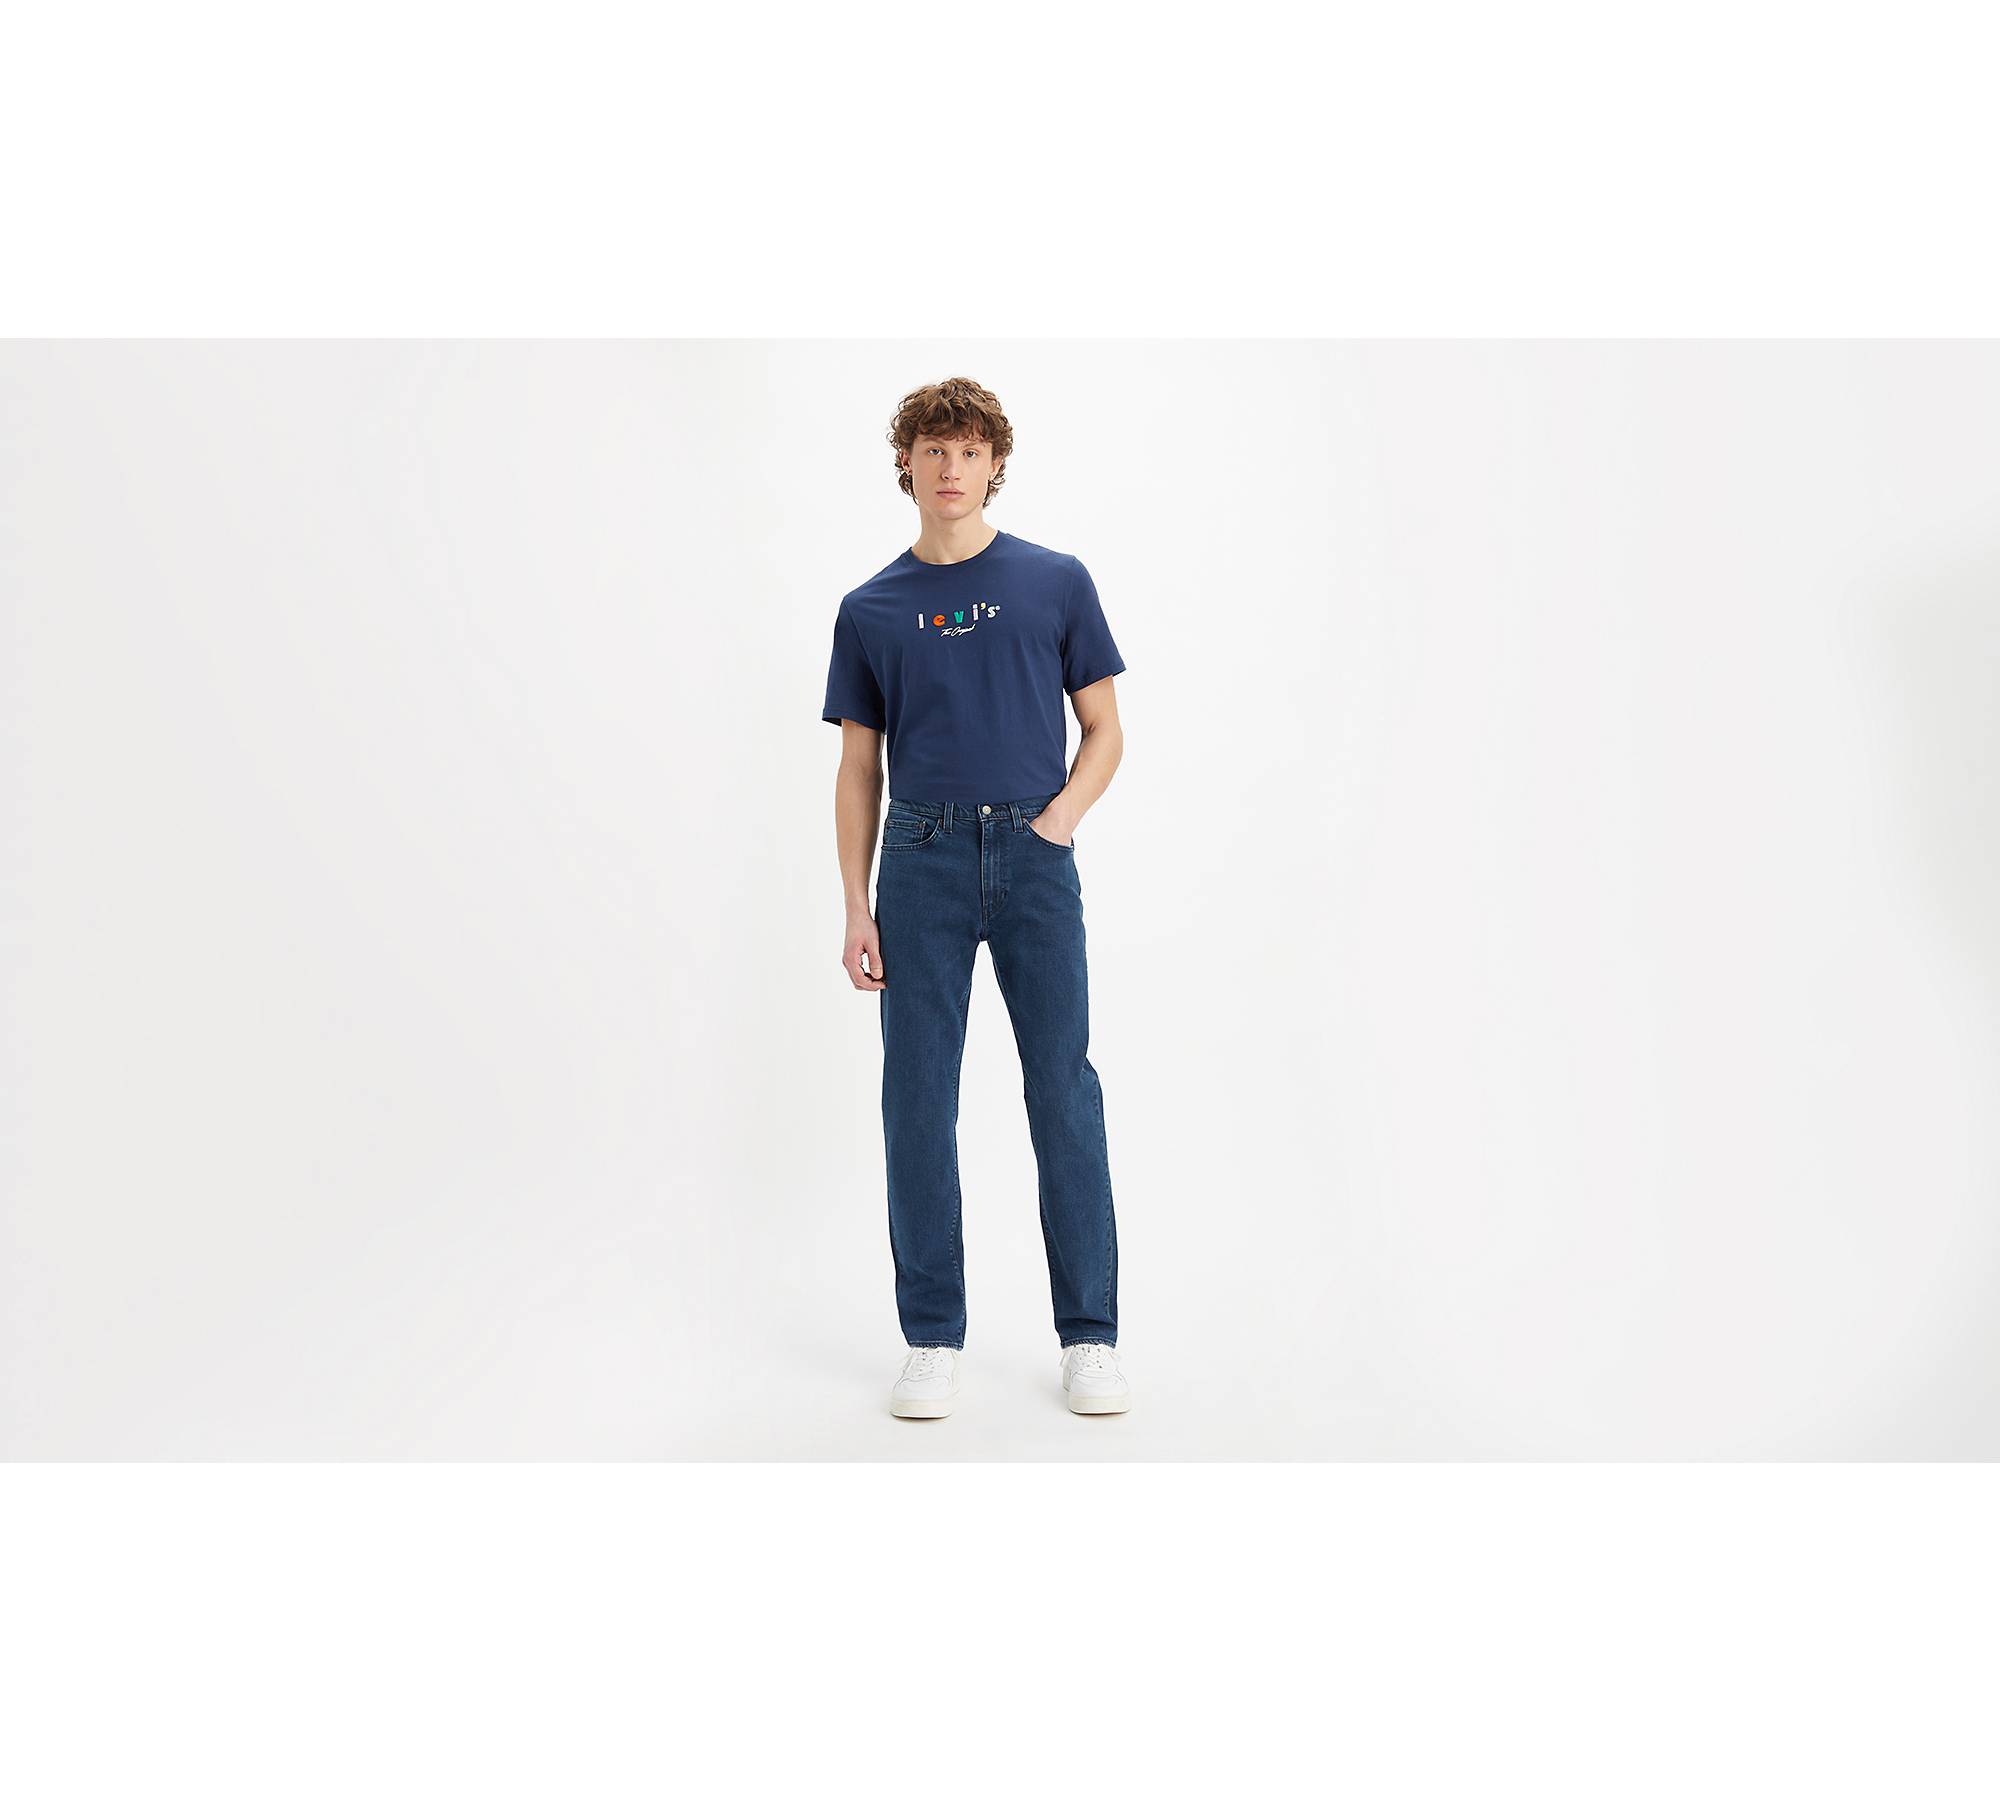 514™ Straight Fit Men's Jeans - Blue